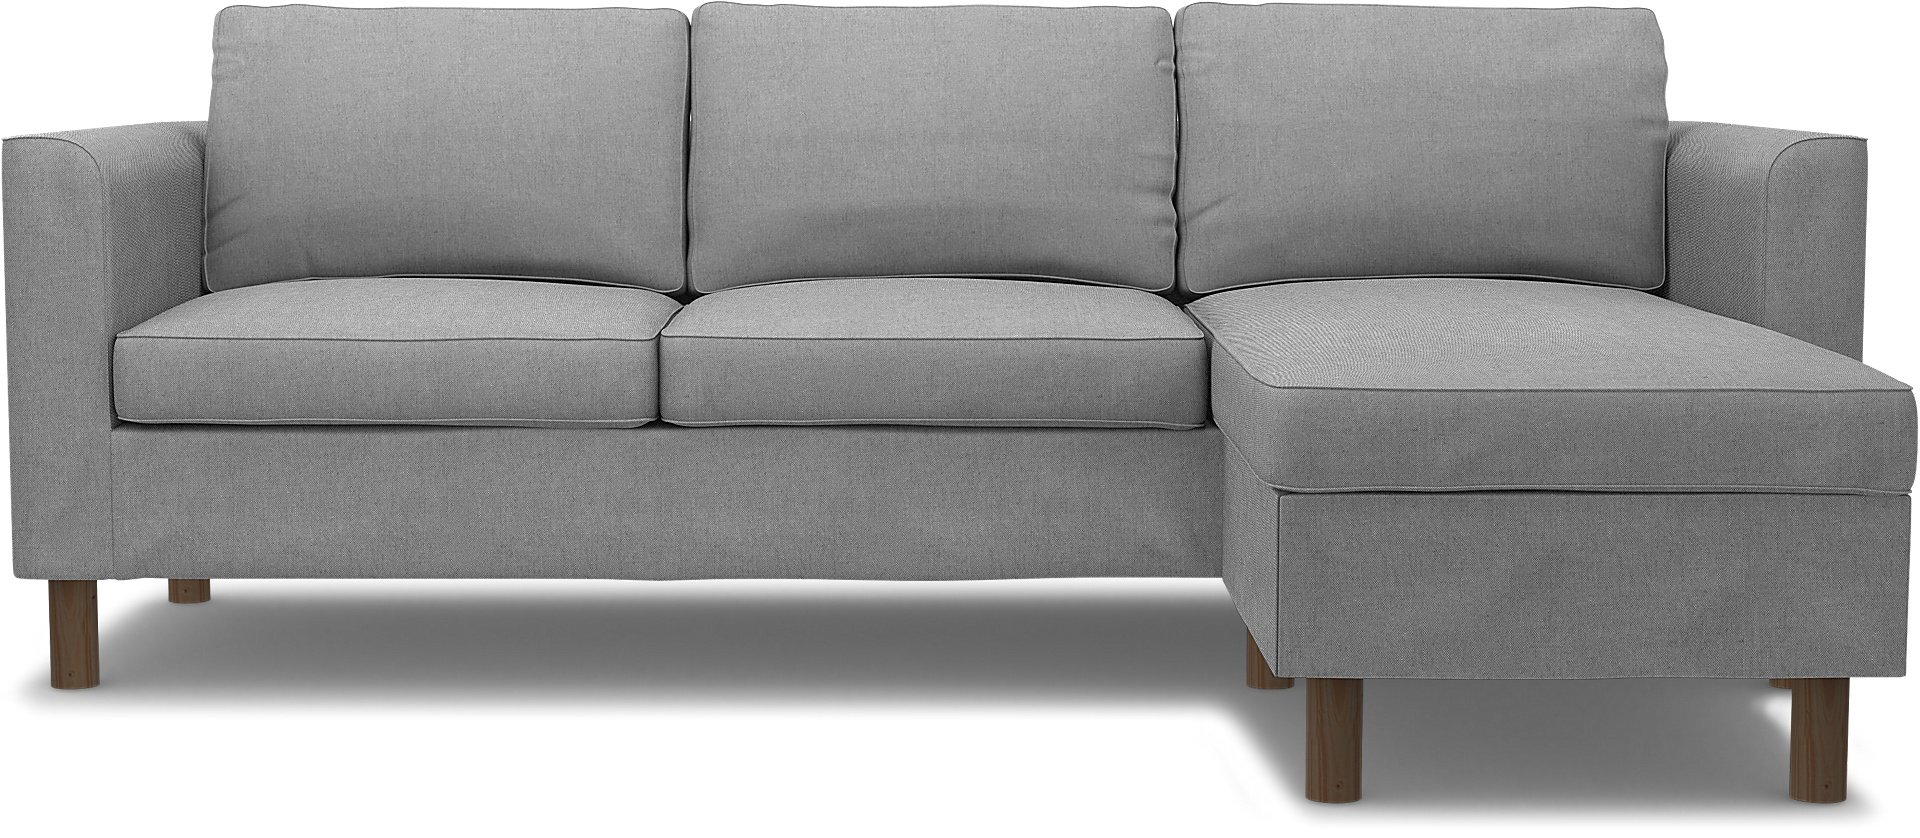 IKEA - Parup 3 Seater with chaise longue, Graphite, Linen - Bemz